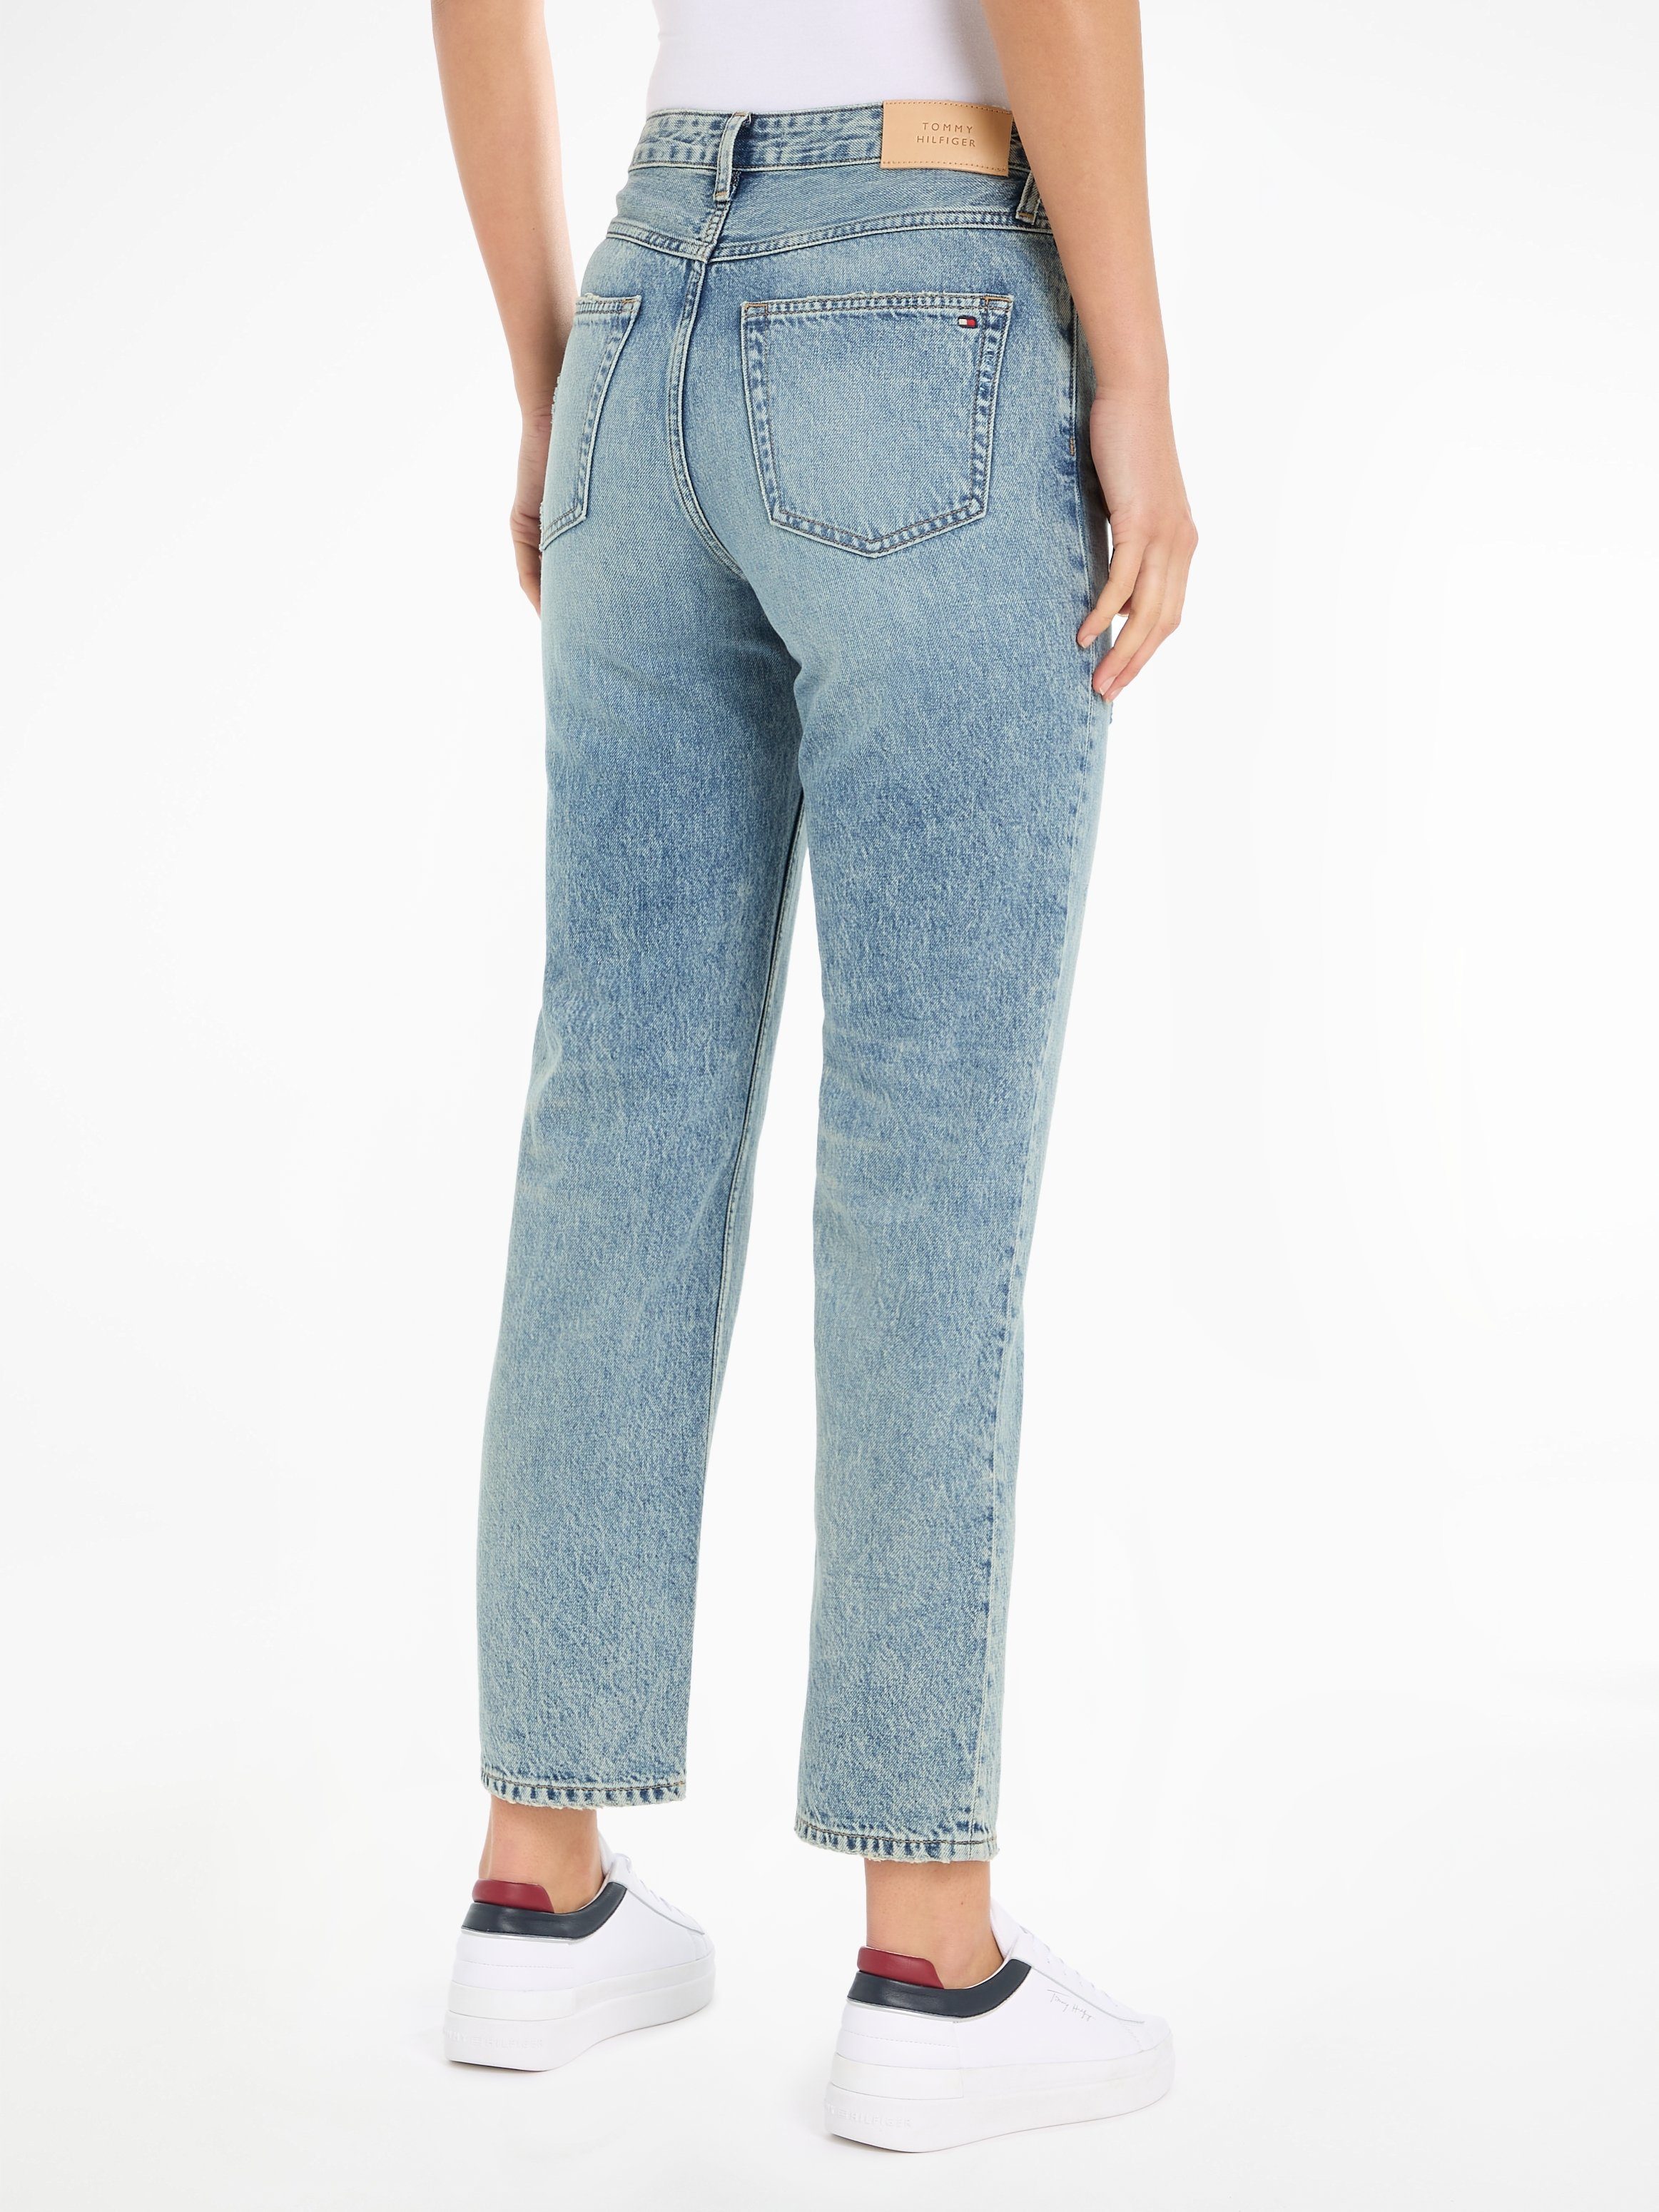 Tommy Hilfiger Straight-Jeans CLASSIC STRAIGHT WRN A MIO Logostickerei HW mit